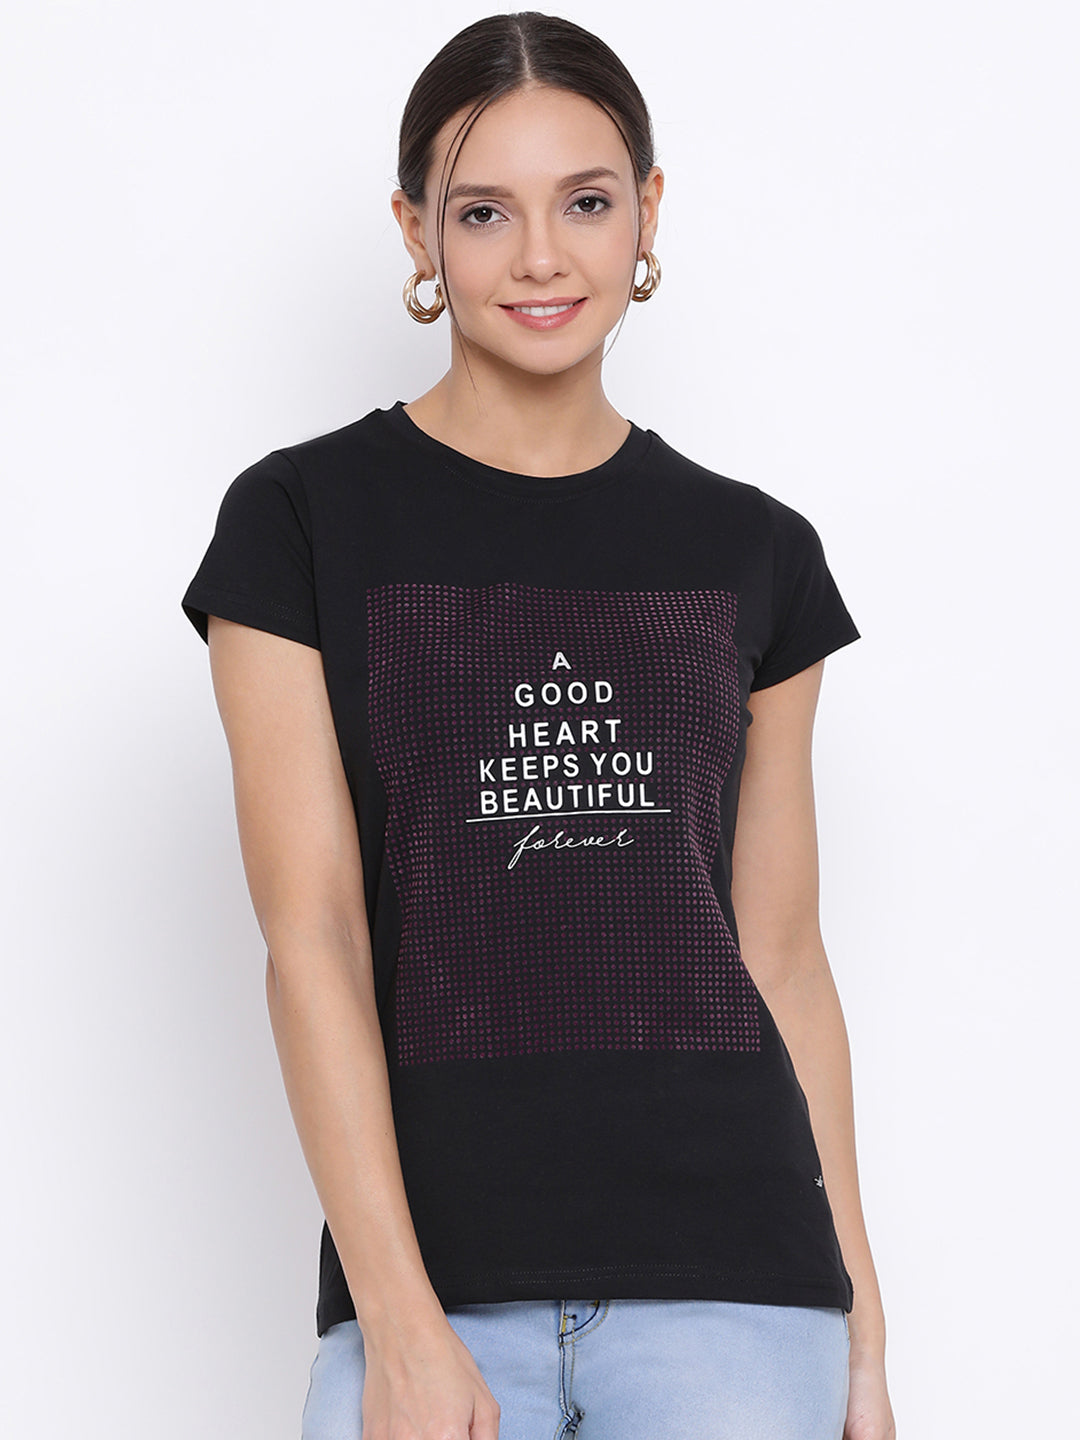 Black Printed Slogan T-shirt - Women T-Shirts